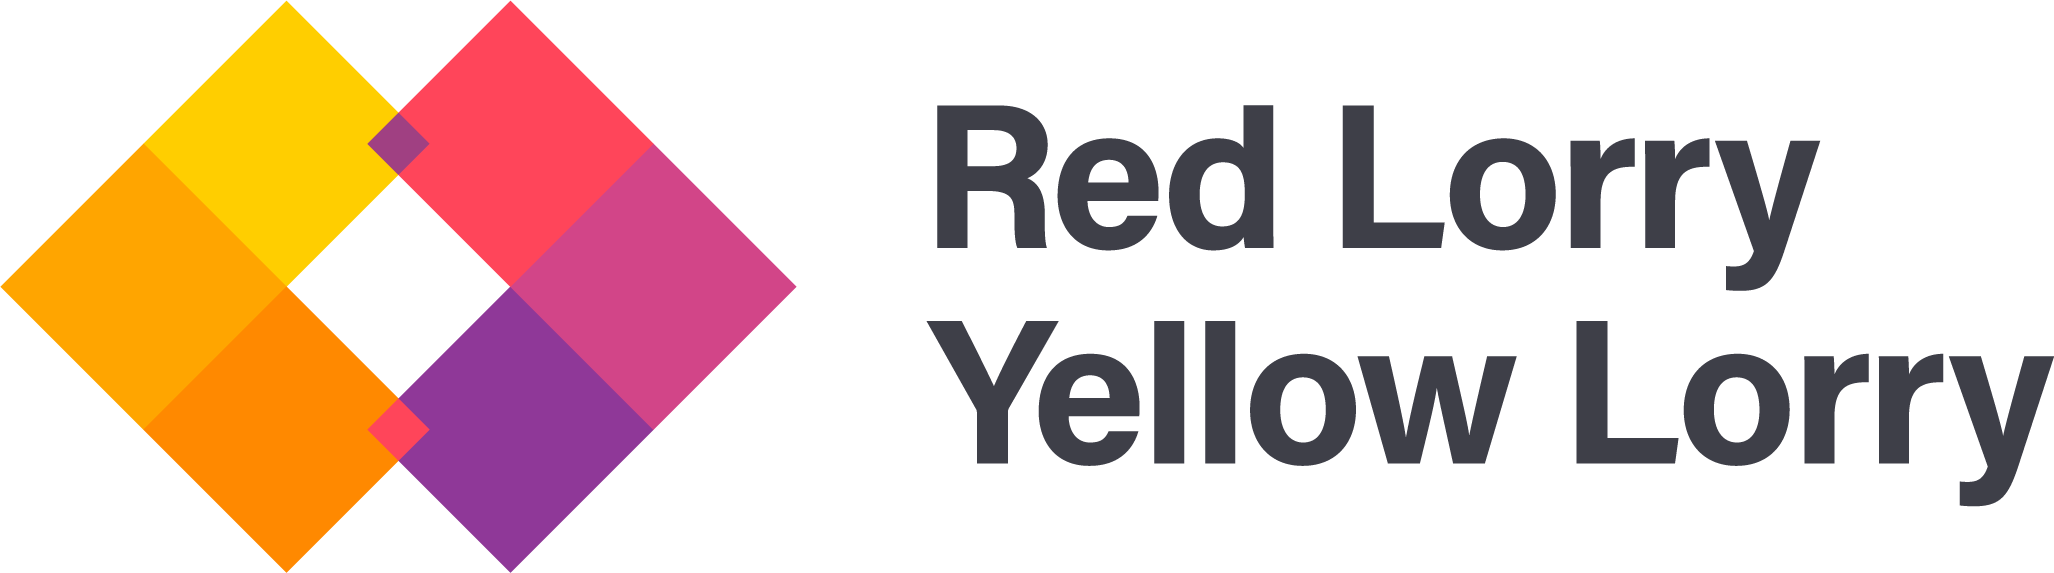 Red Yellow Logo - B2B Technology PR Agency | Comms | Tech PR | Red Lorry Yellow Lorry